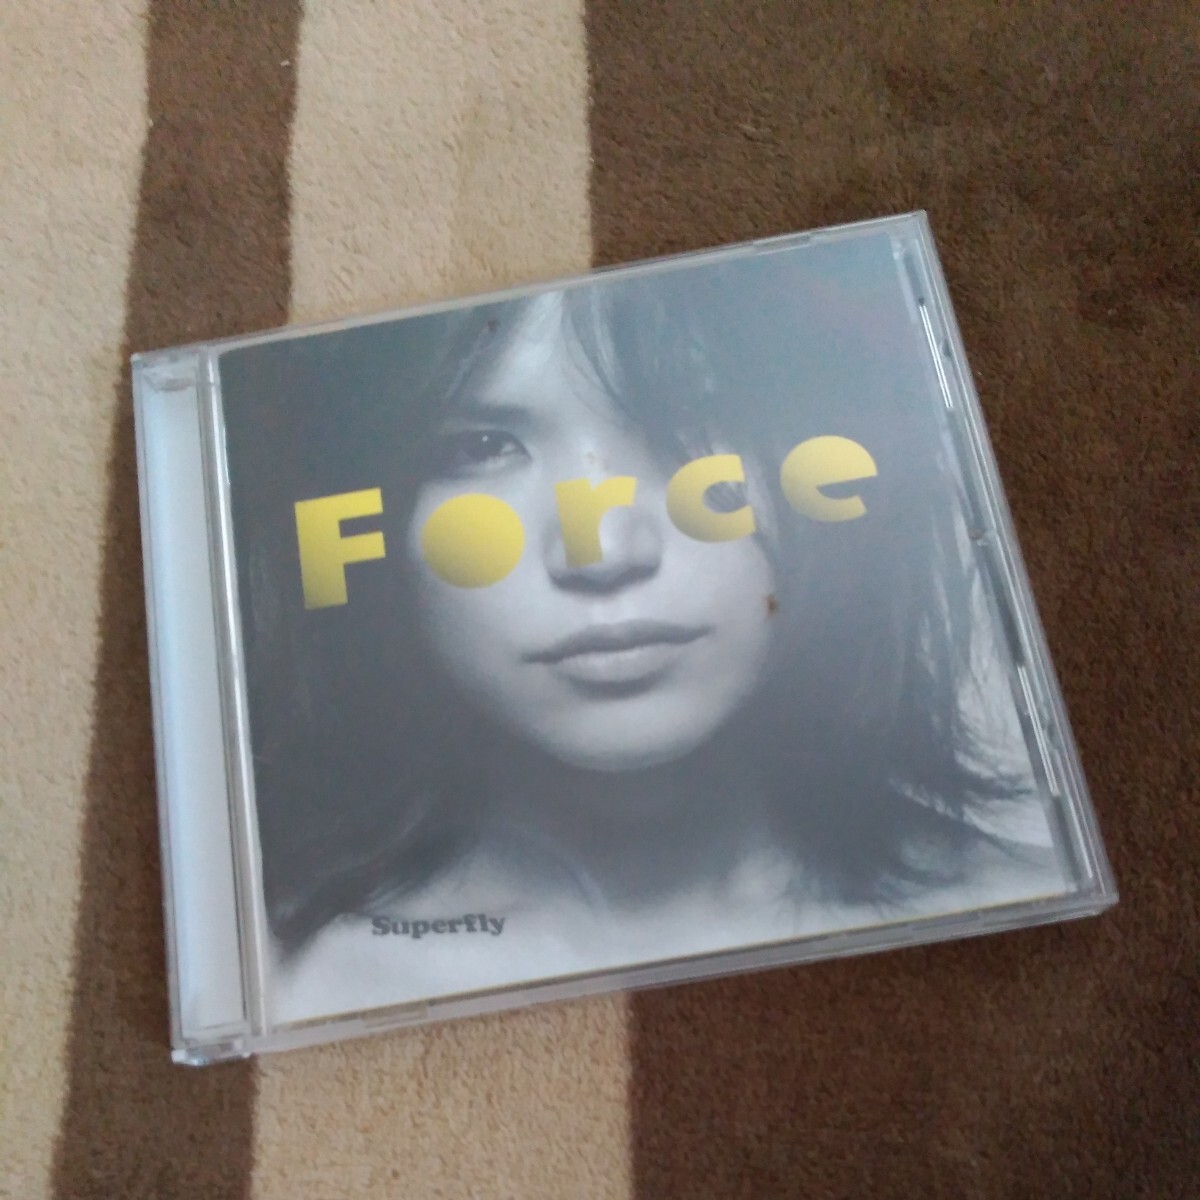 Superfly Force CD アルバム スーパーフライの画像1